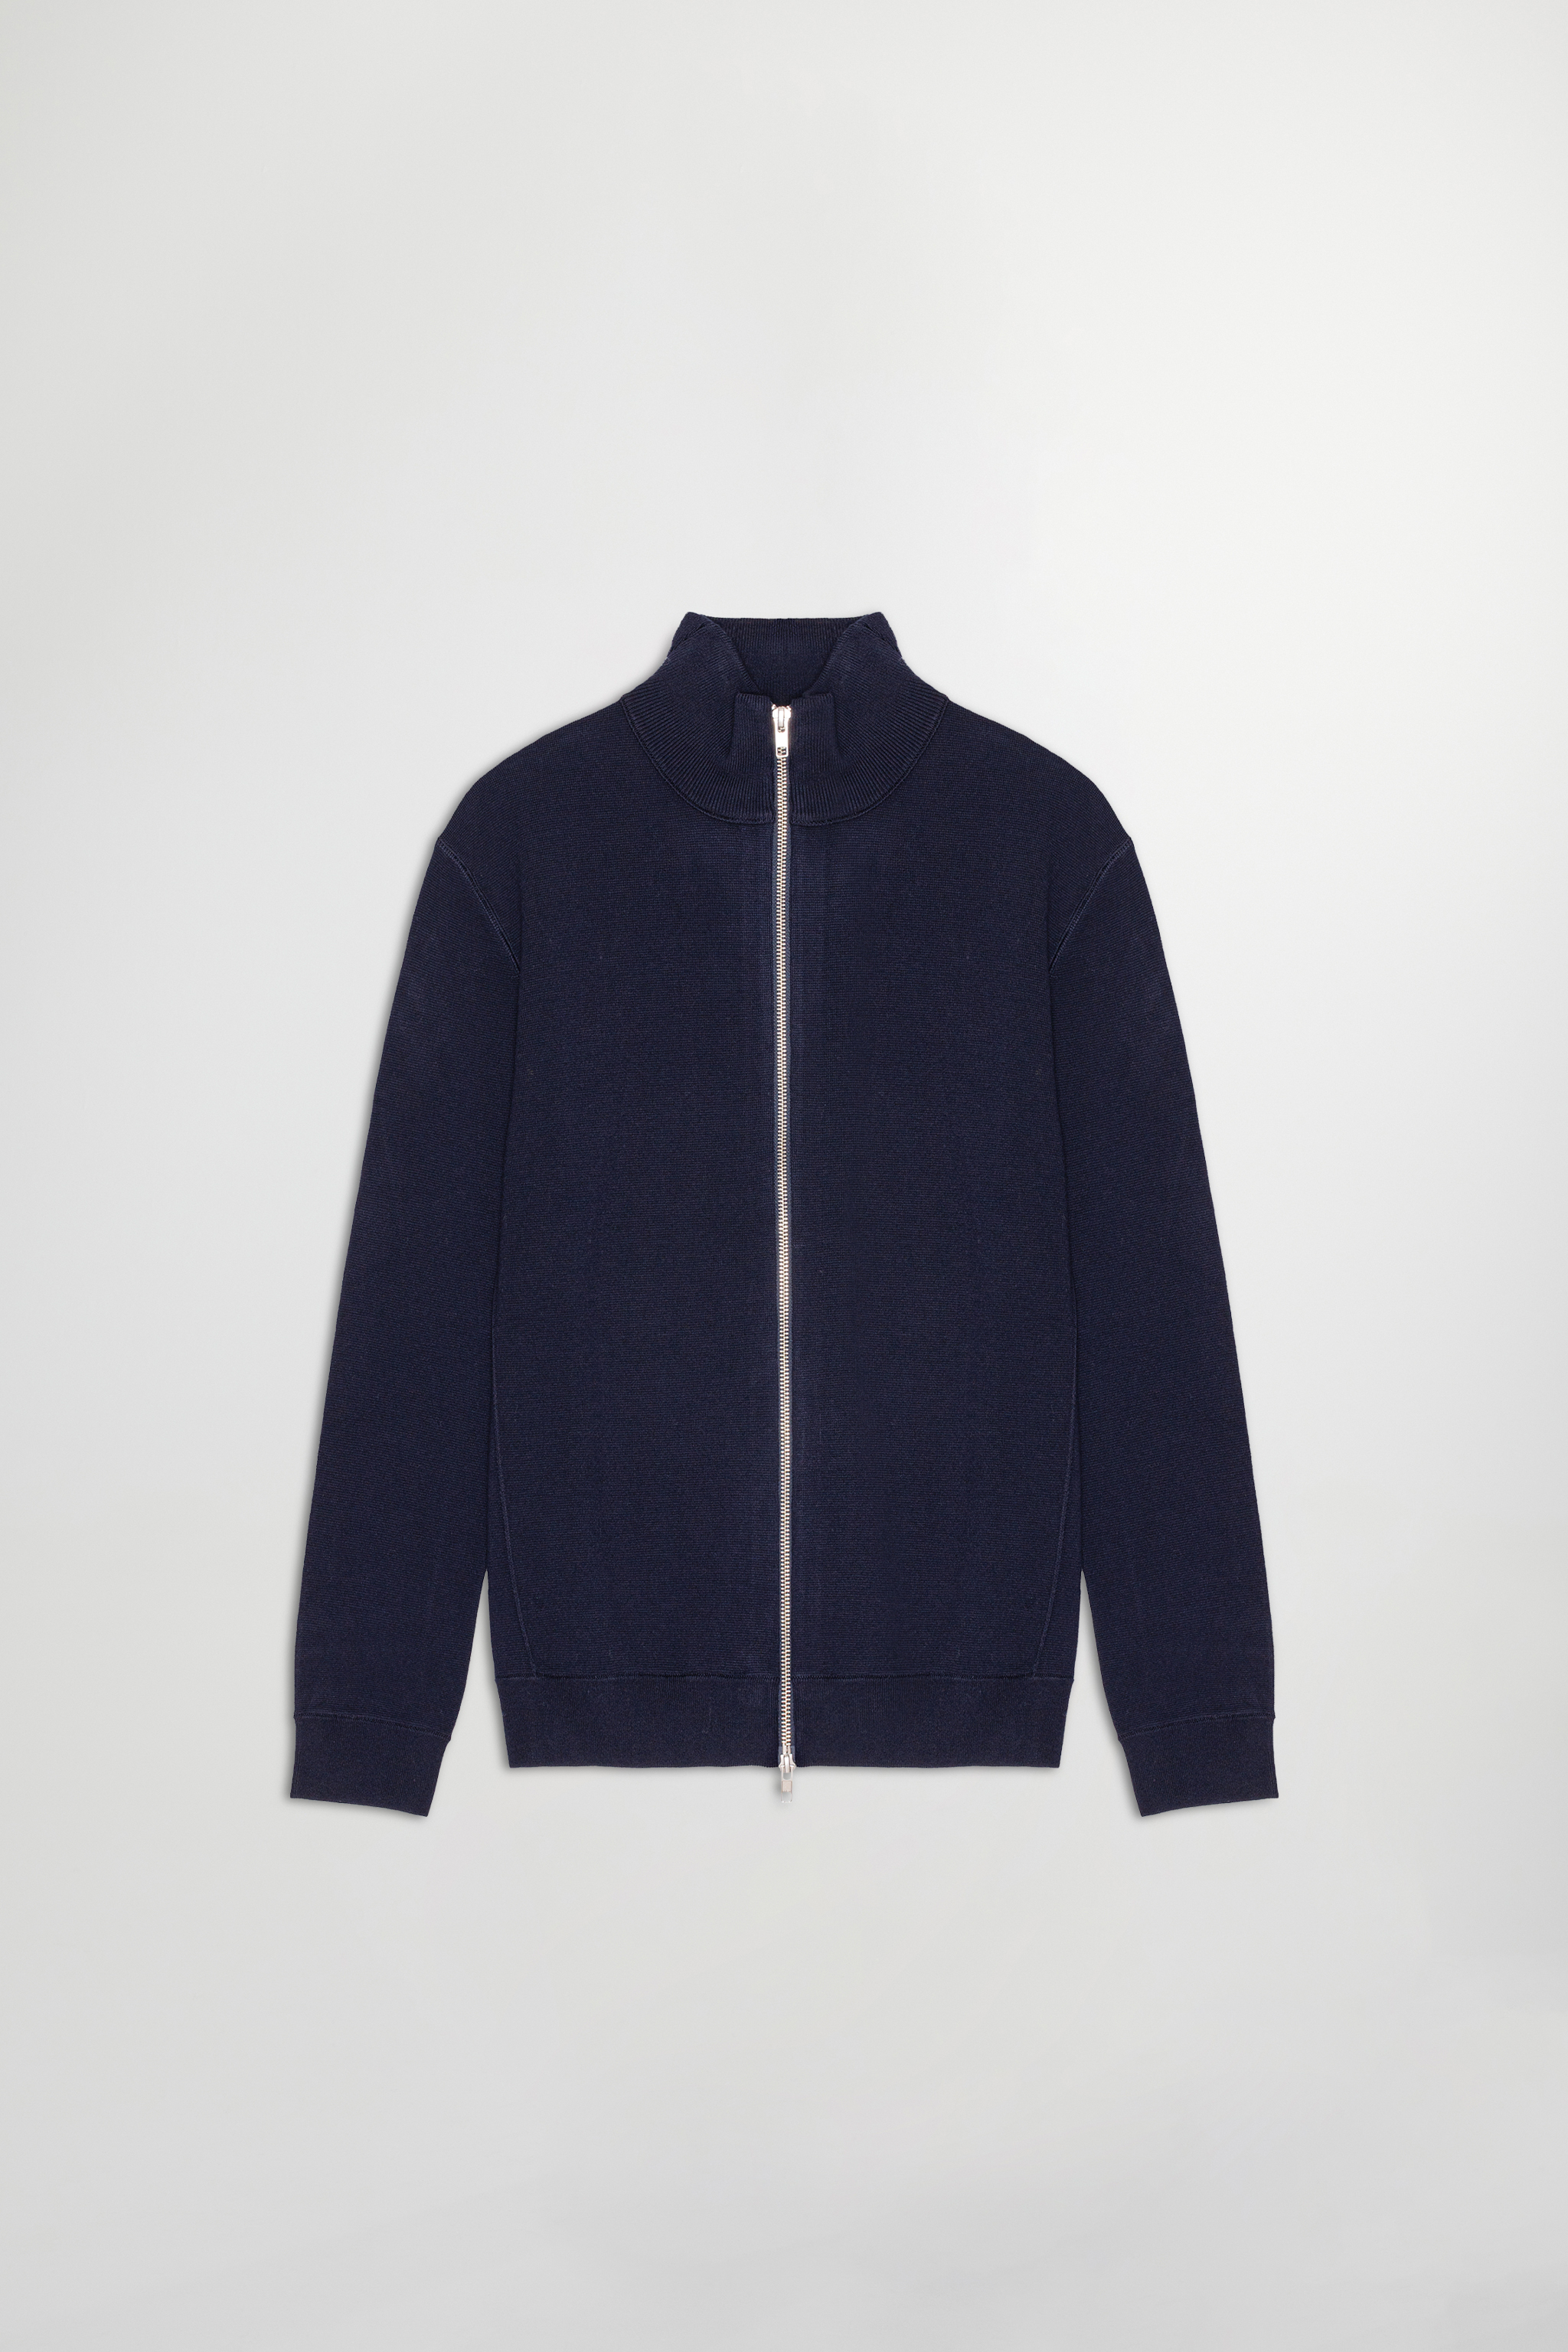 Luis 6430 men's sweater - Blue - Buy online at NN.07®